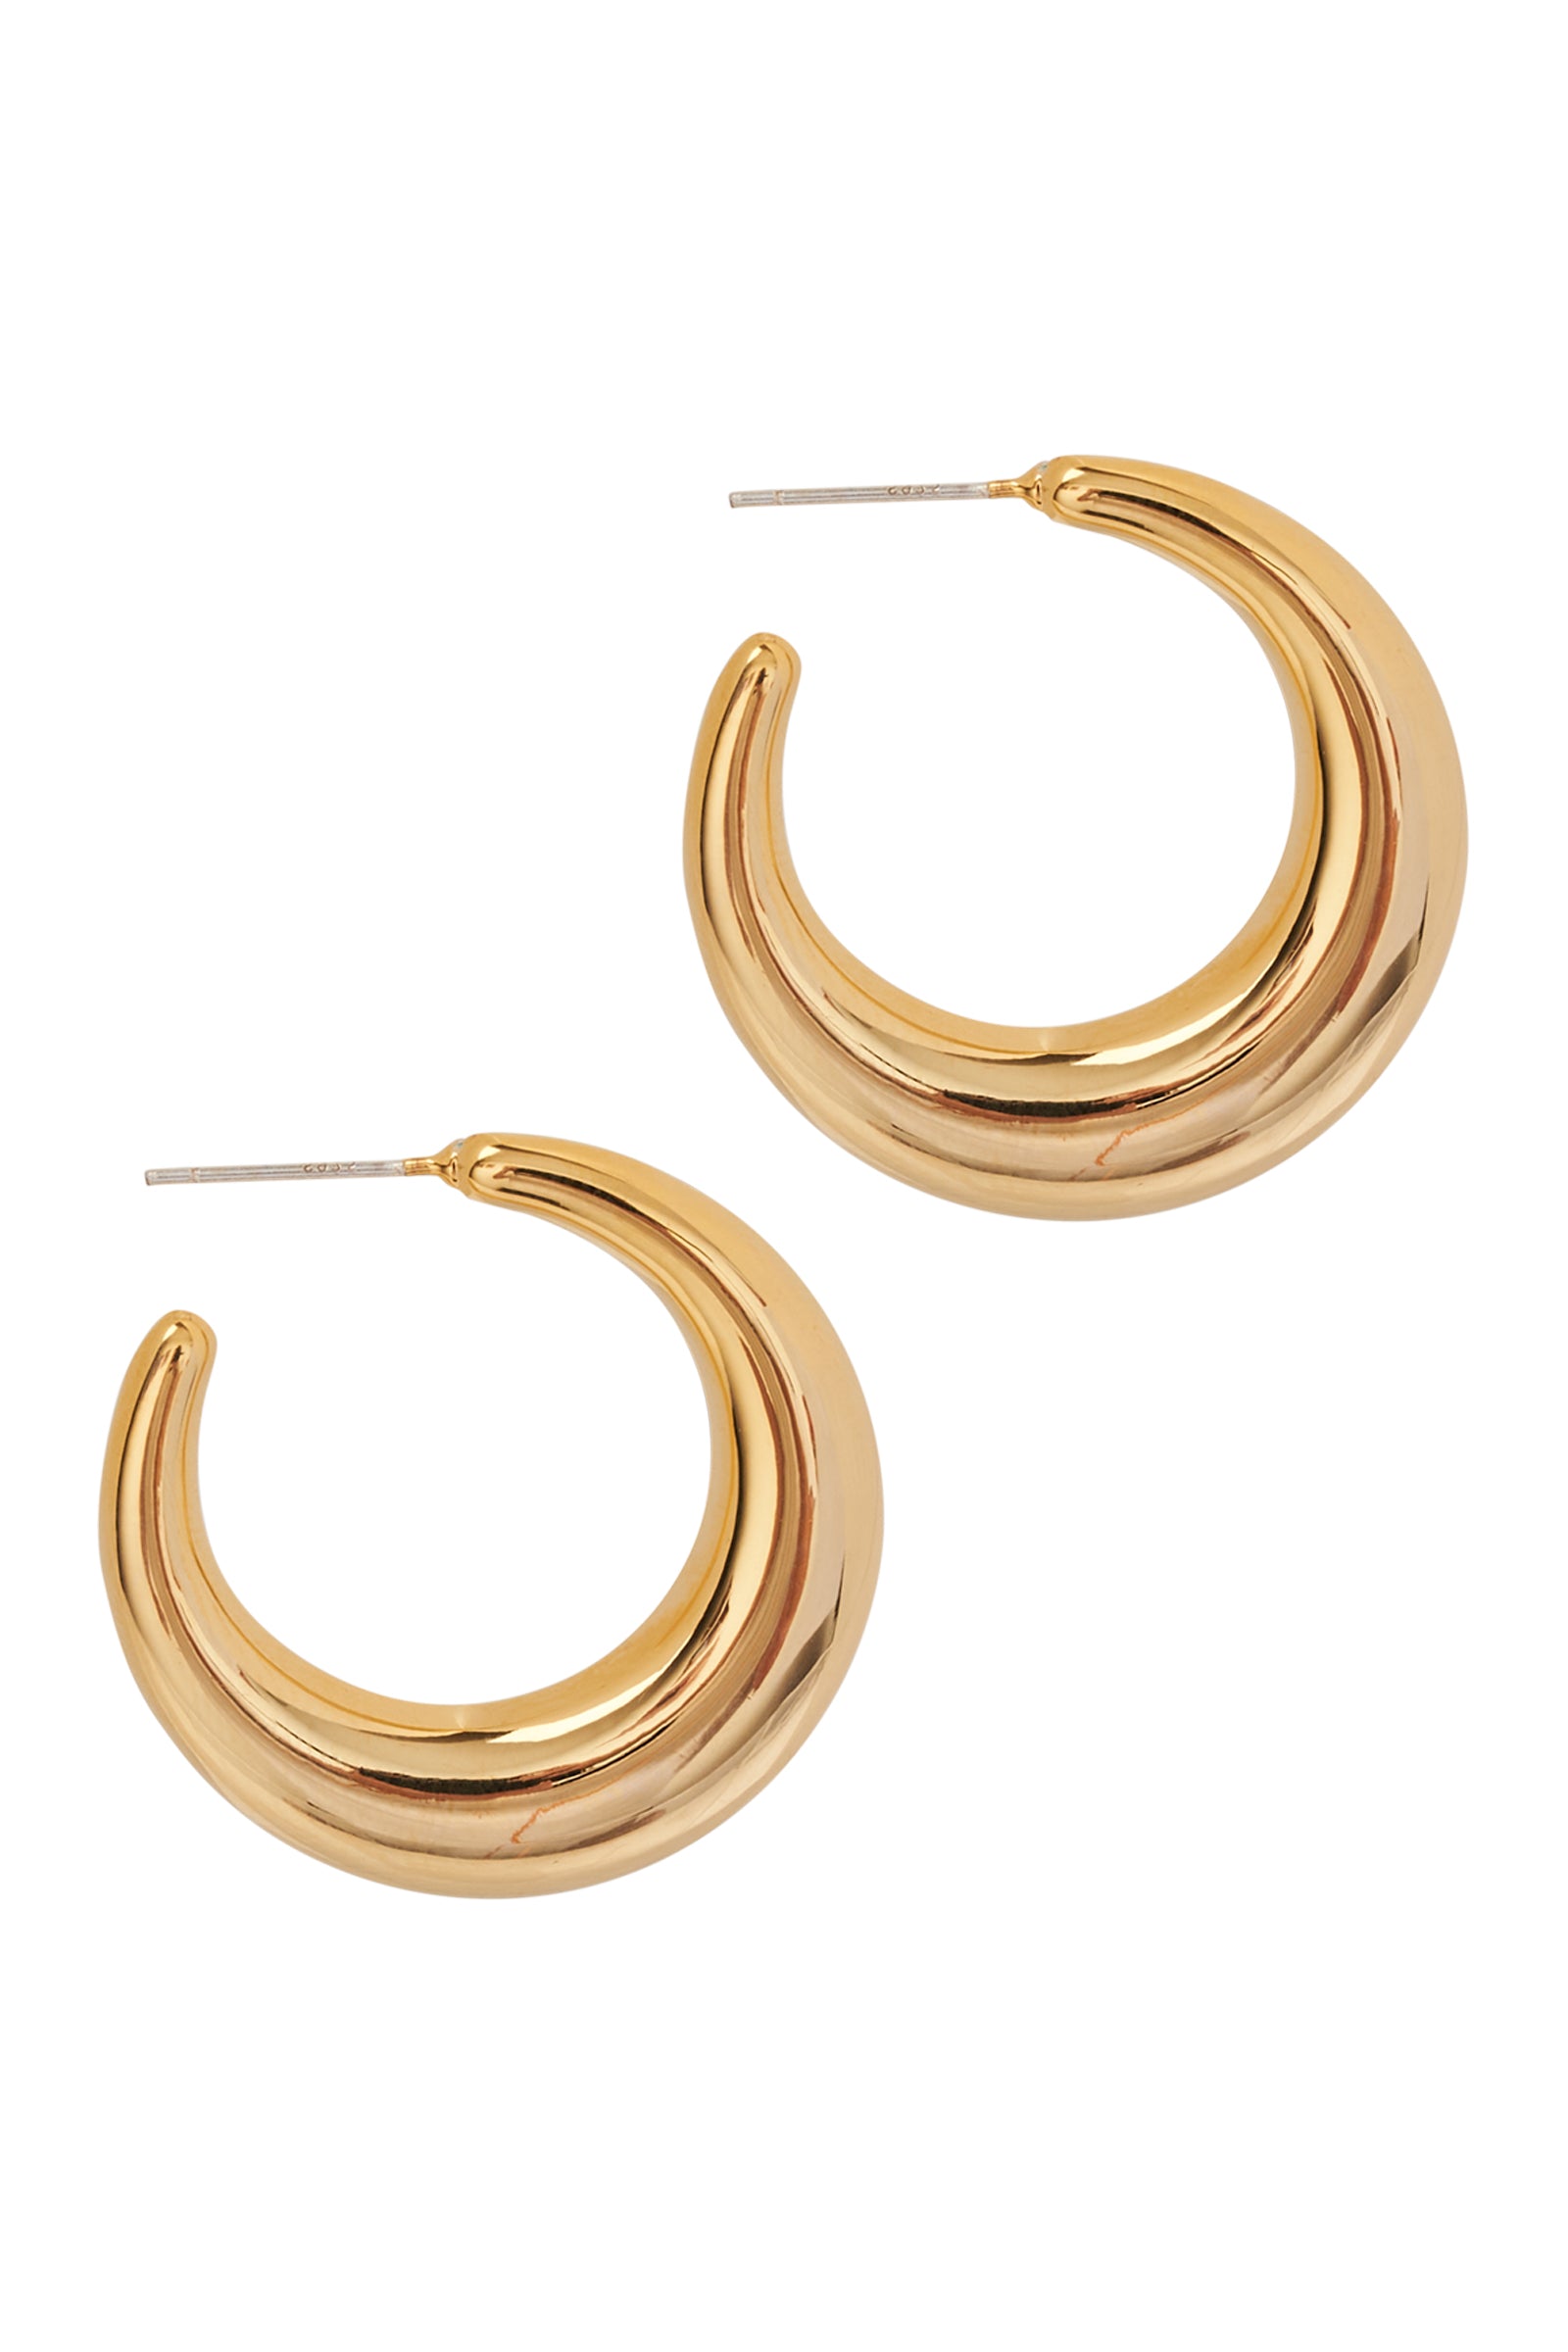 Mayan Hoop Earring - Gold Dome - eb&ive Earring